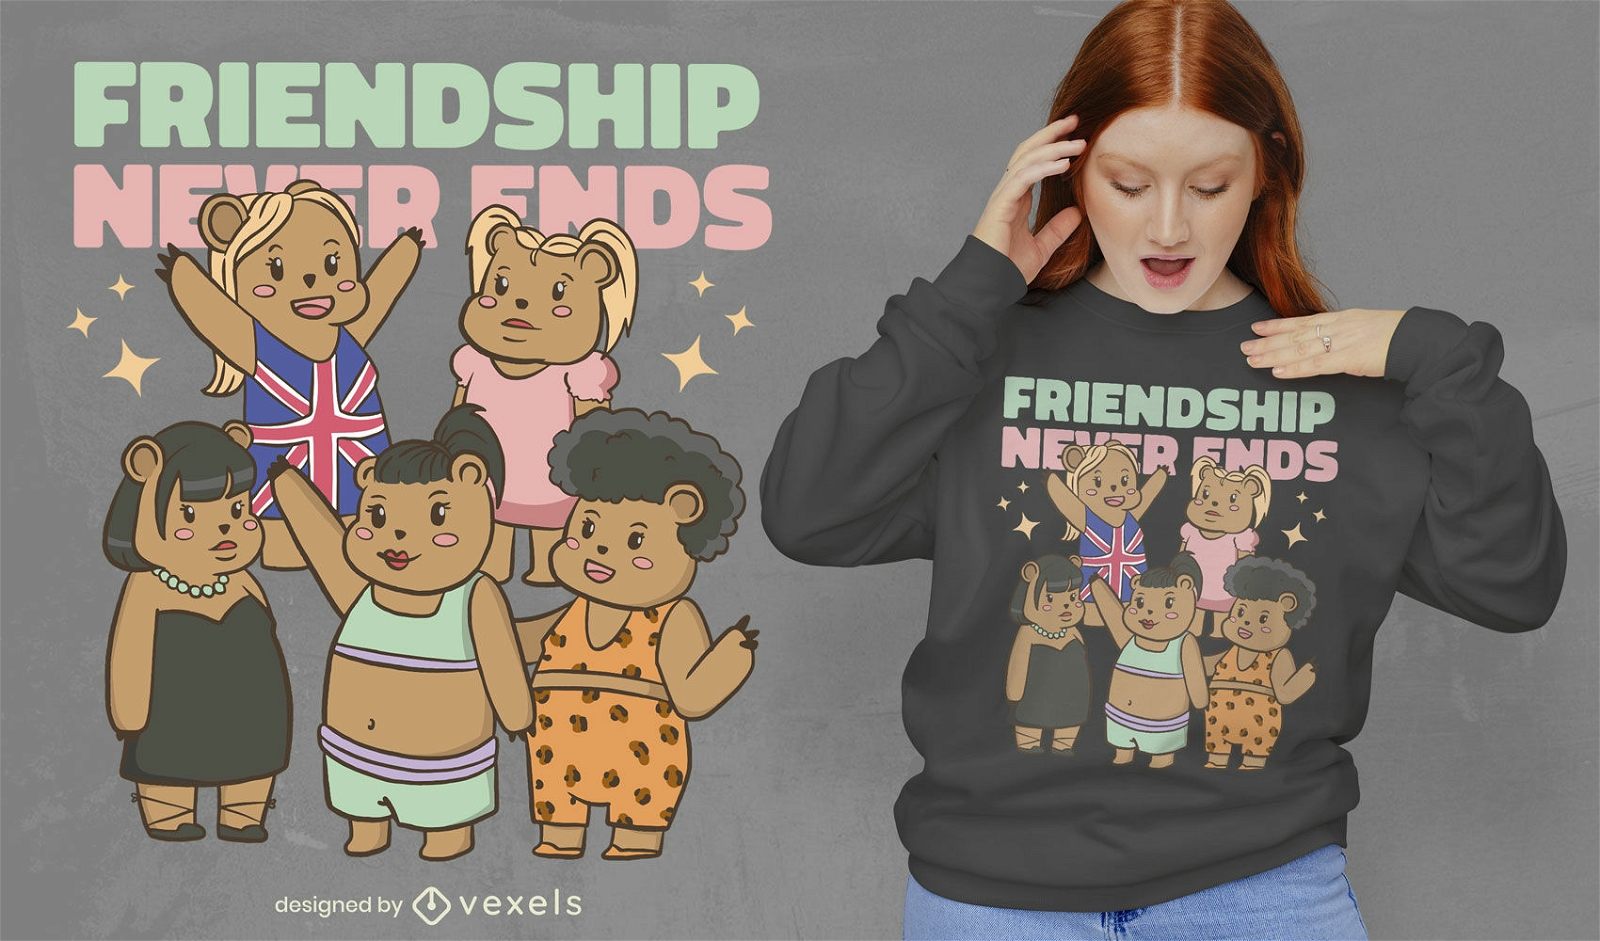 Friendship bears quote t-shirt design